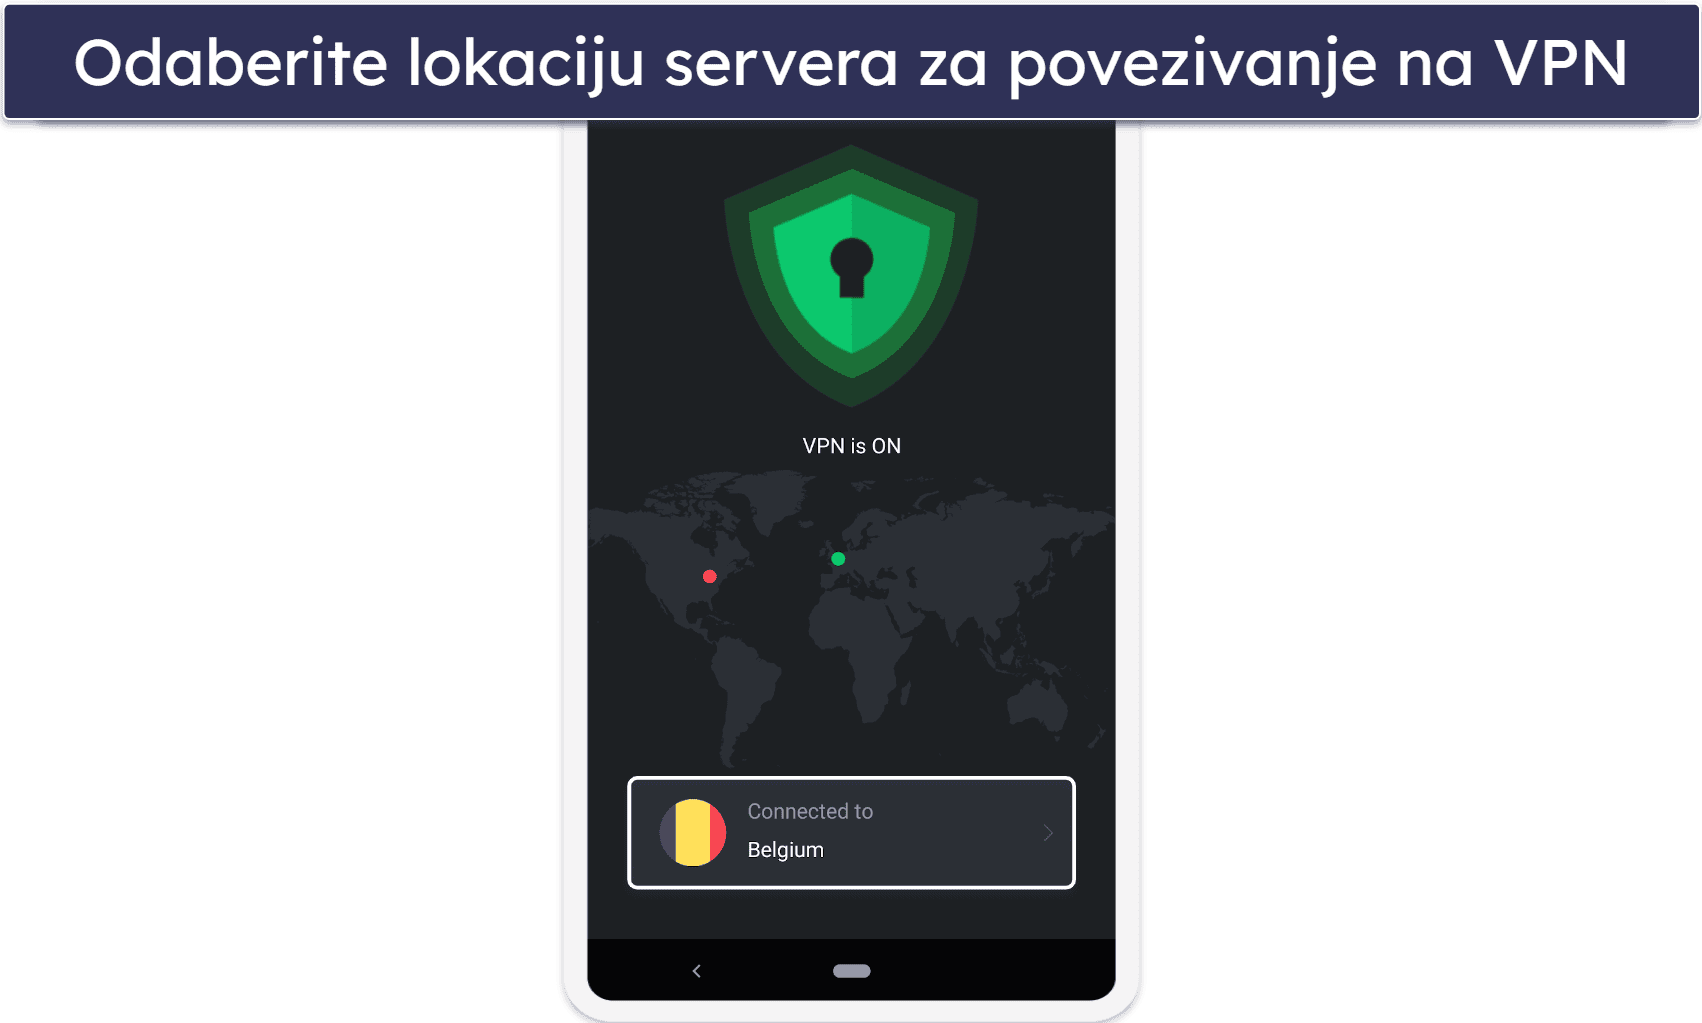 Mobilna aplikacija TotalAV-a